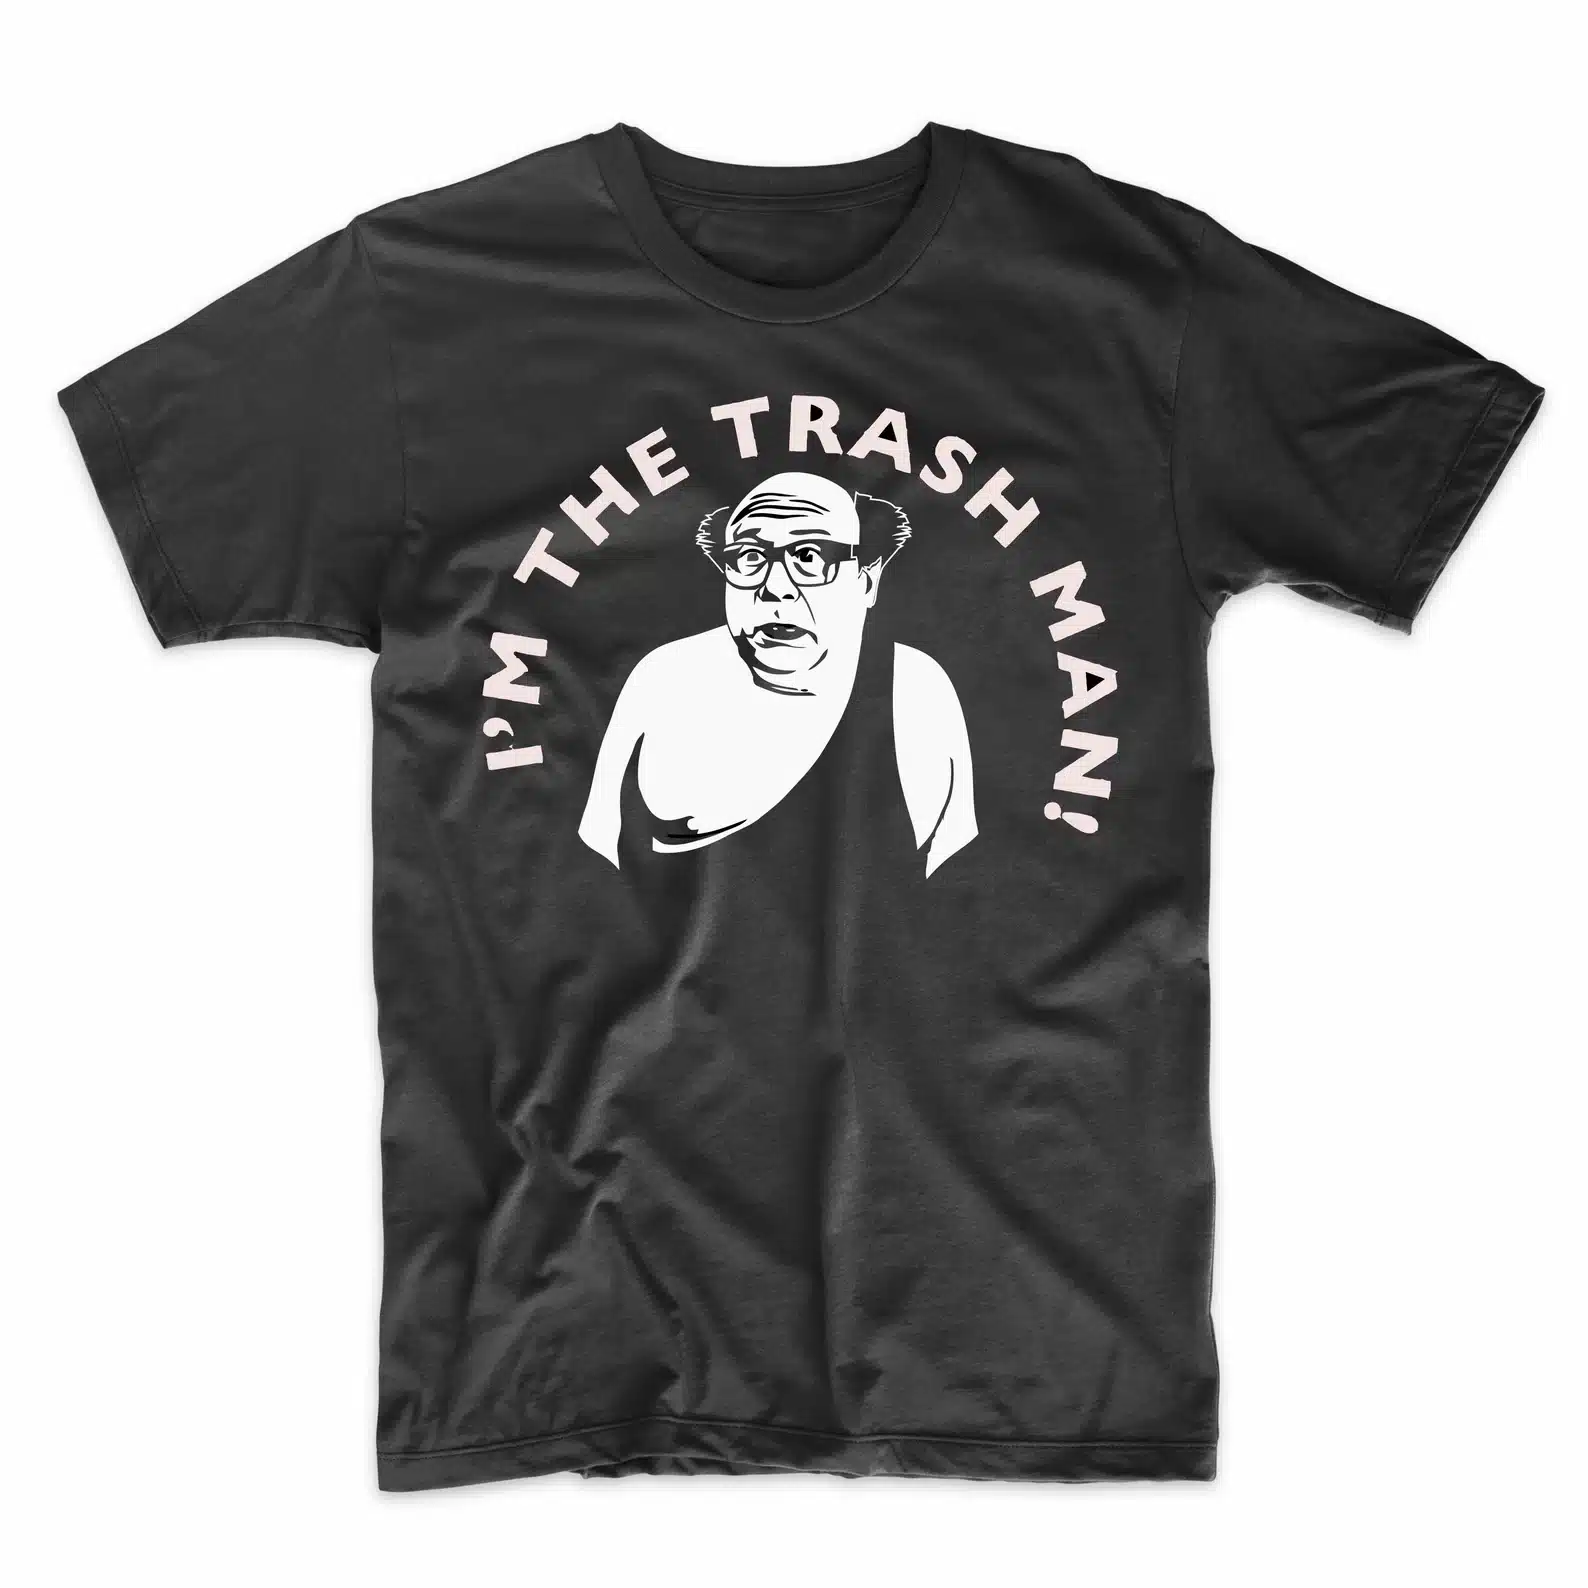 I'm the trash man funny t-shirt